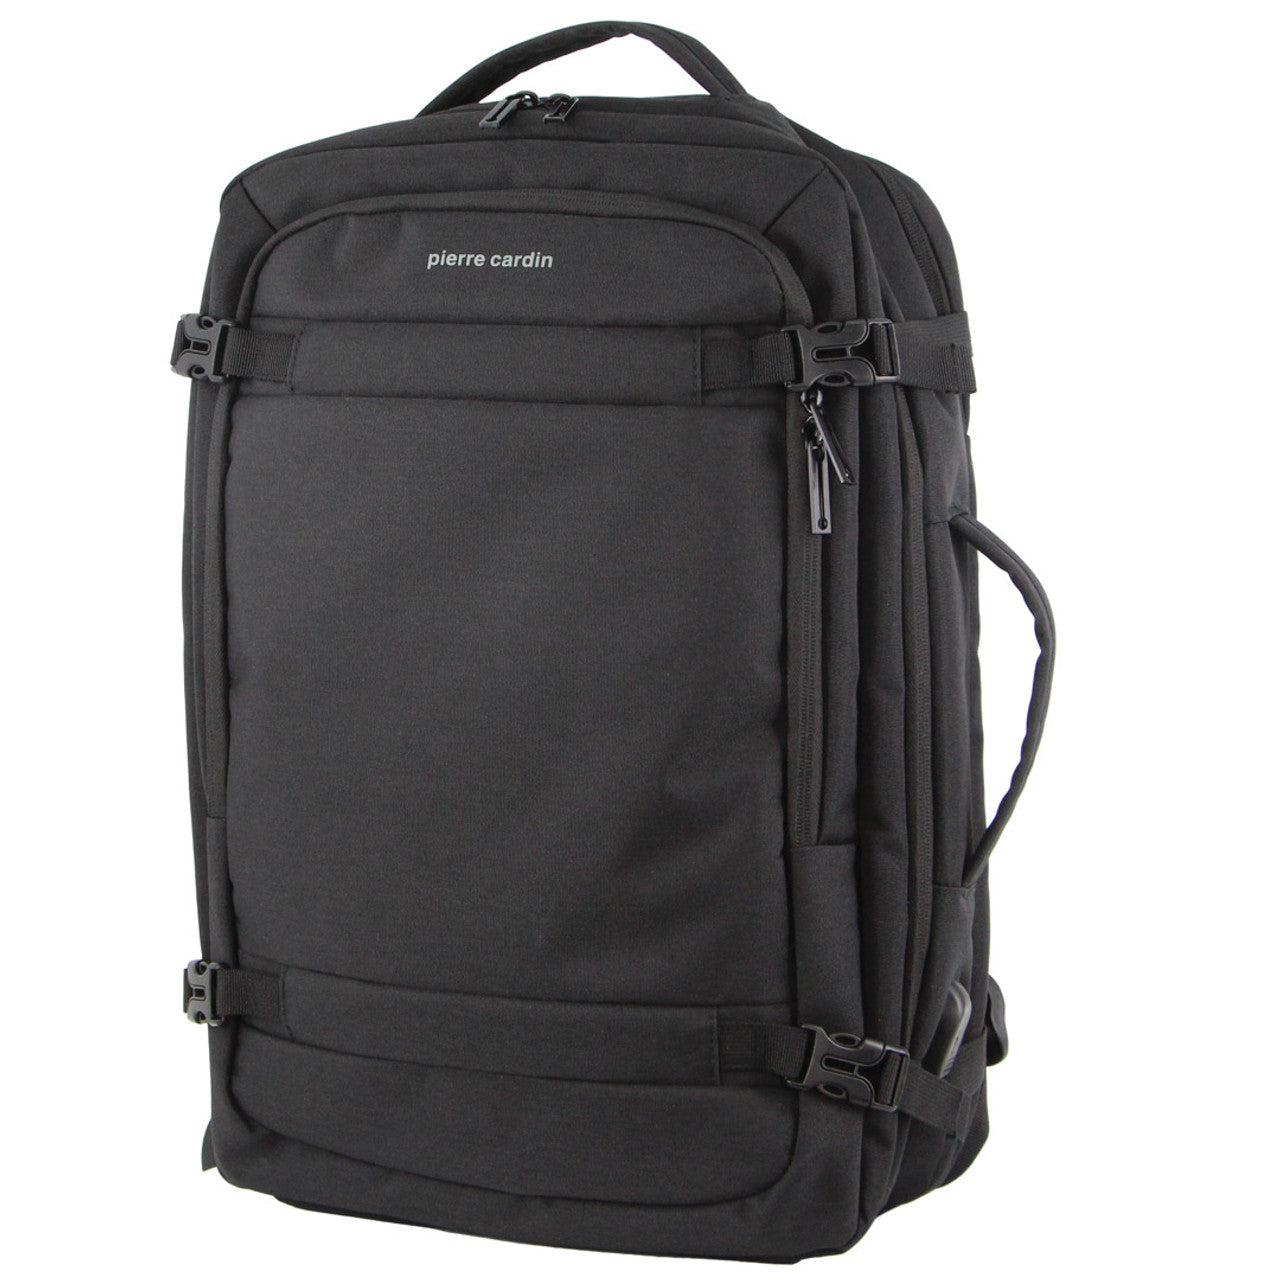 Pierre Cardin - PC3626 Travel Laptop backpack w USB port - Black-1